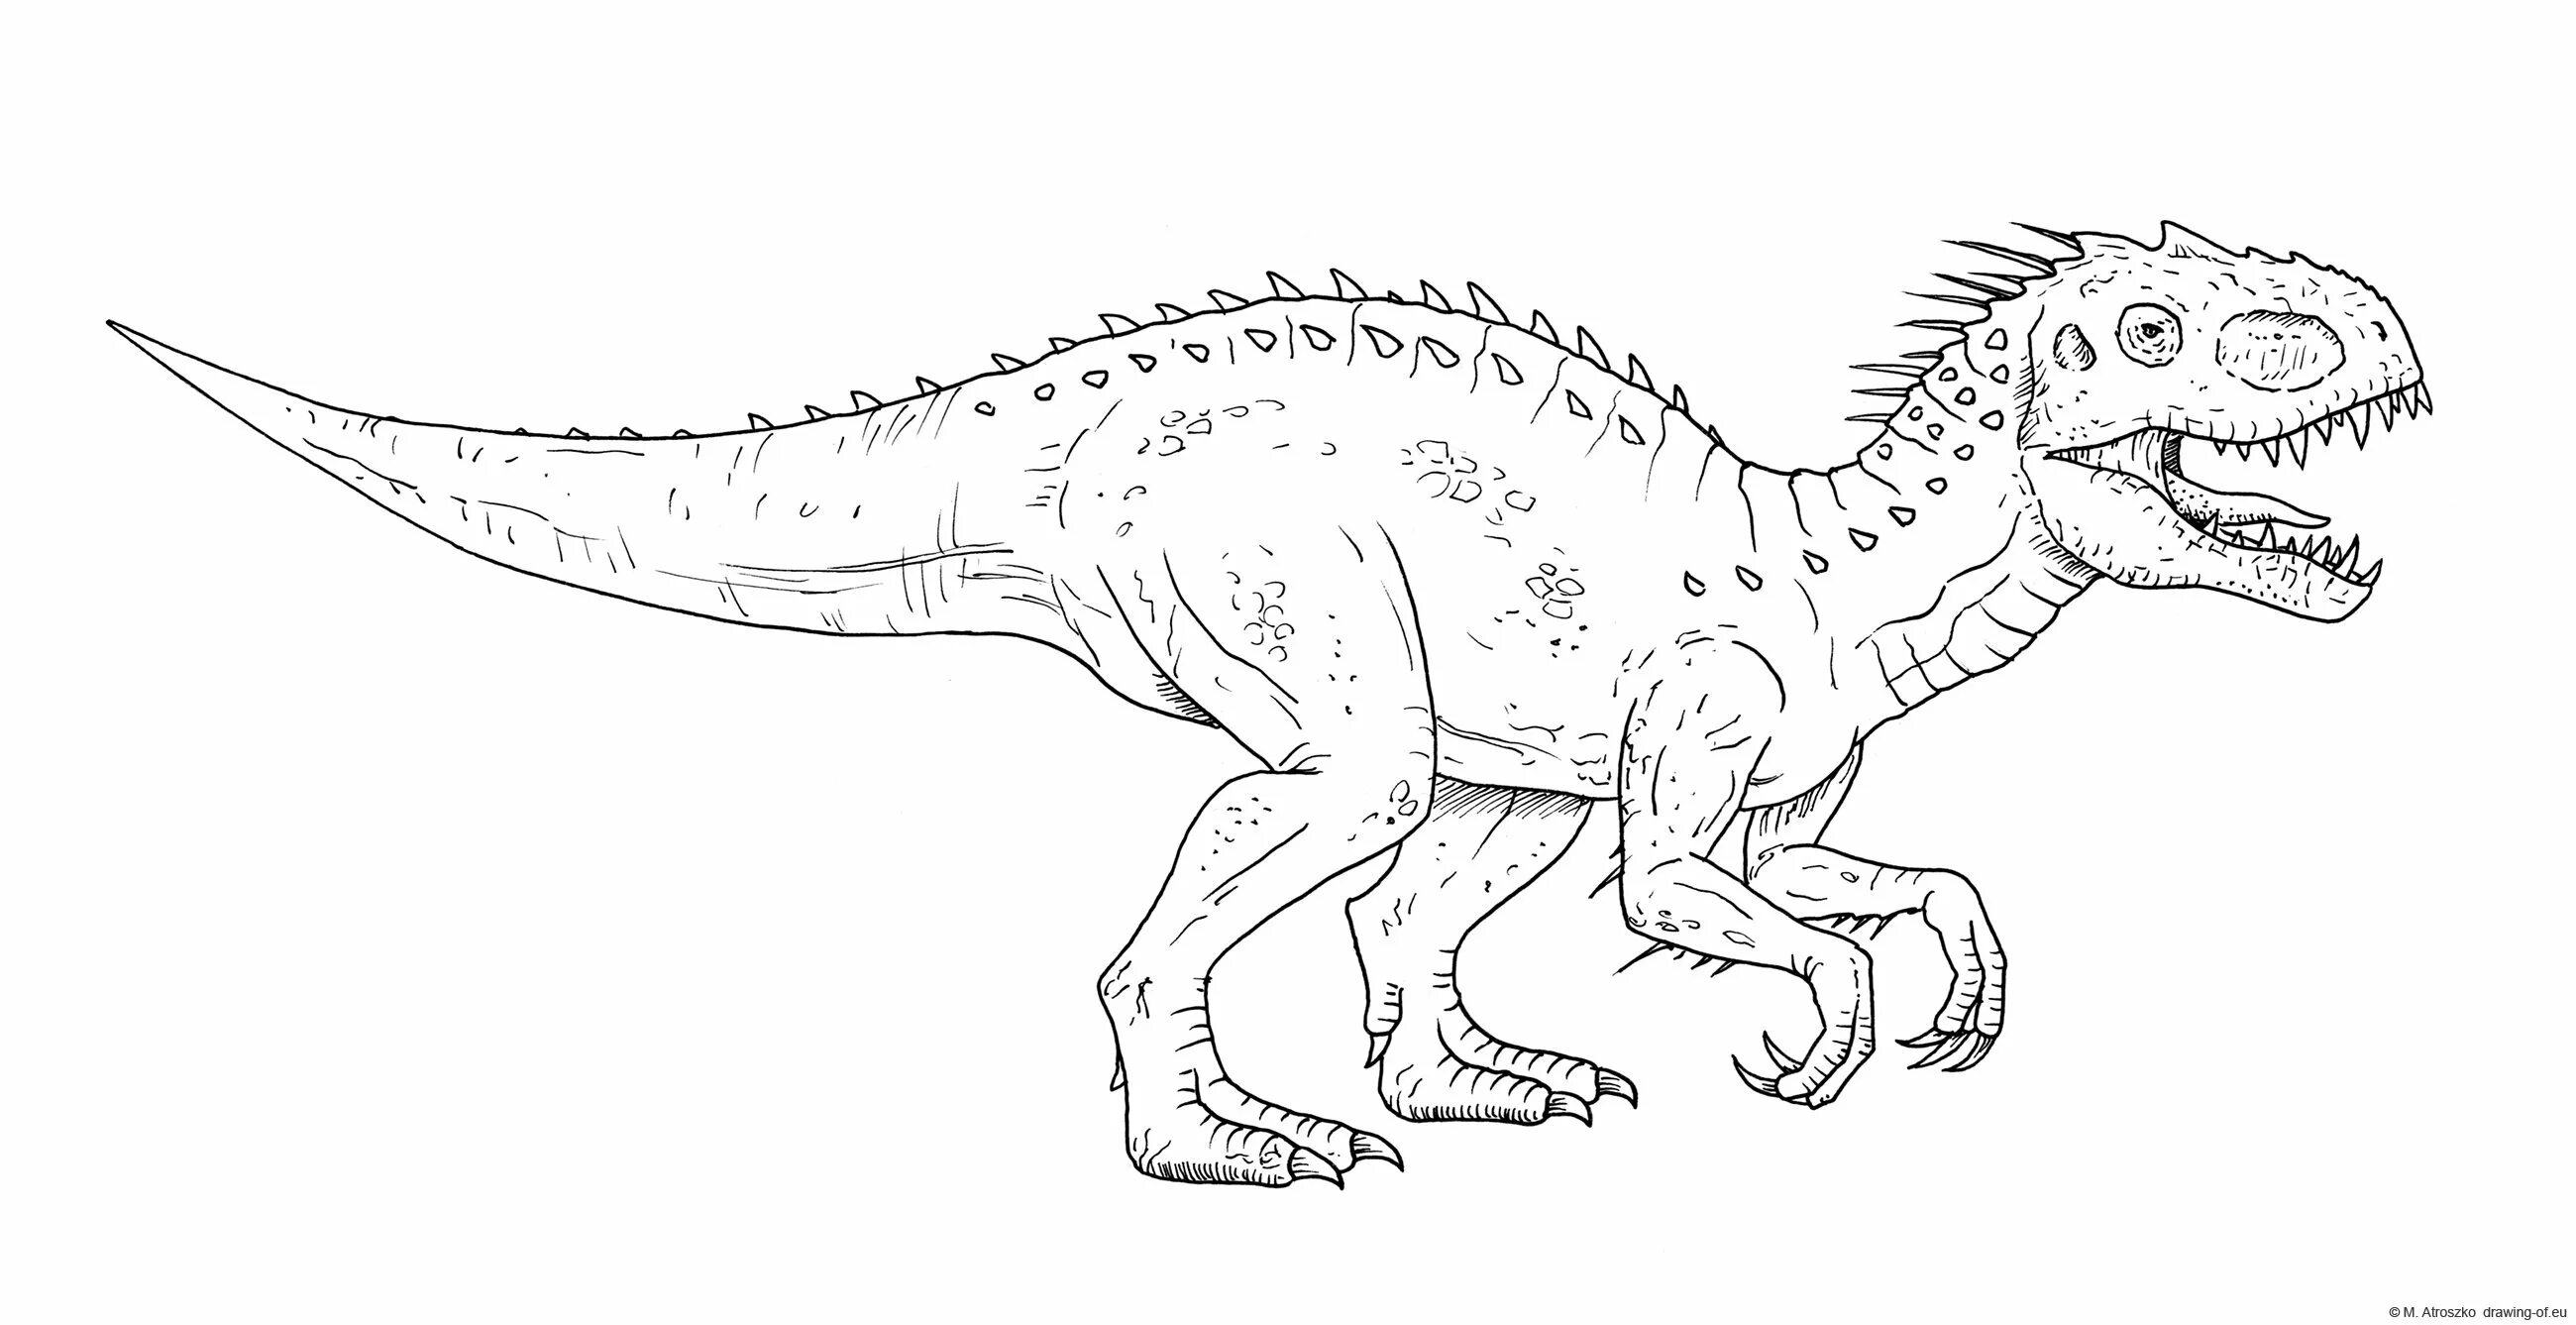 About indominus rex #4